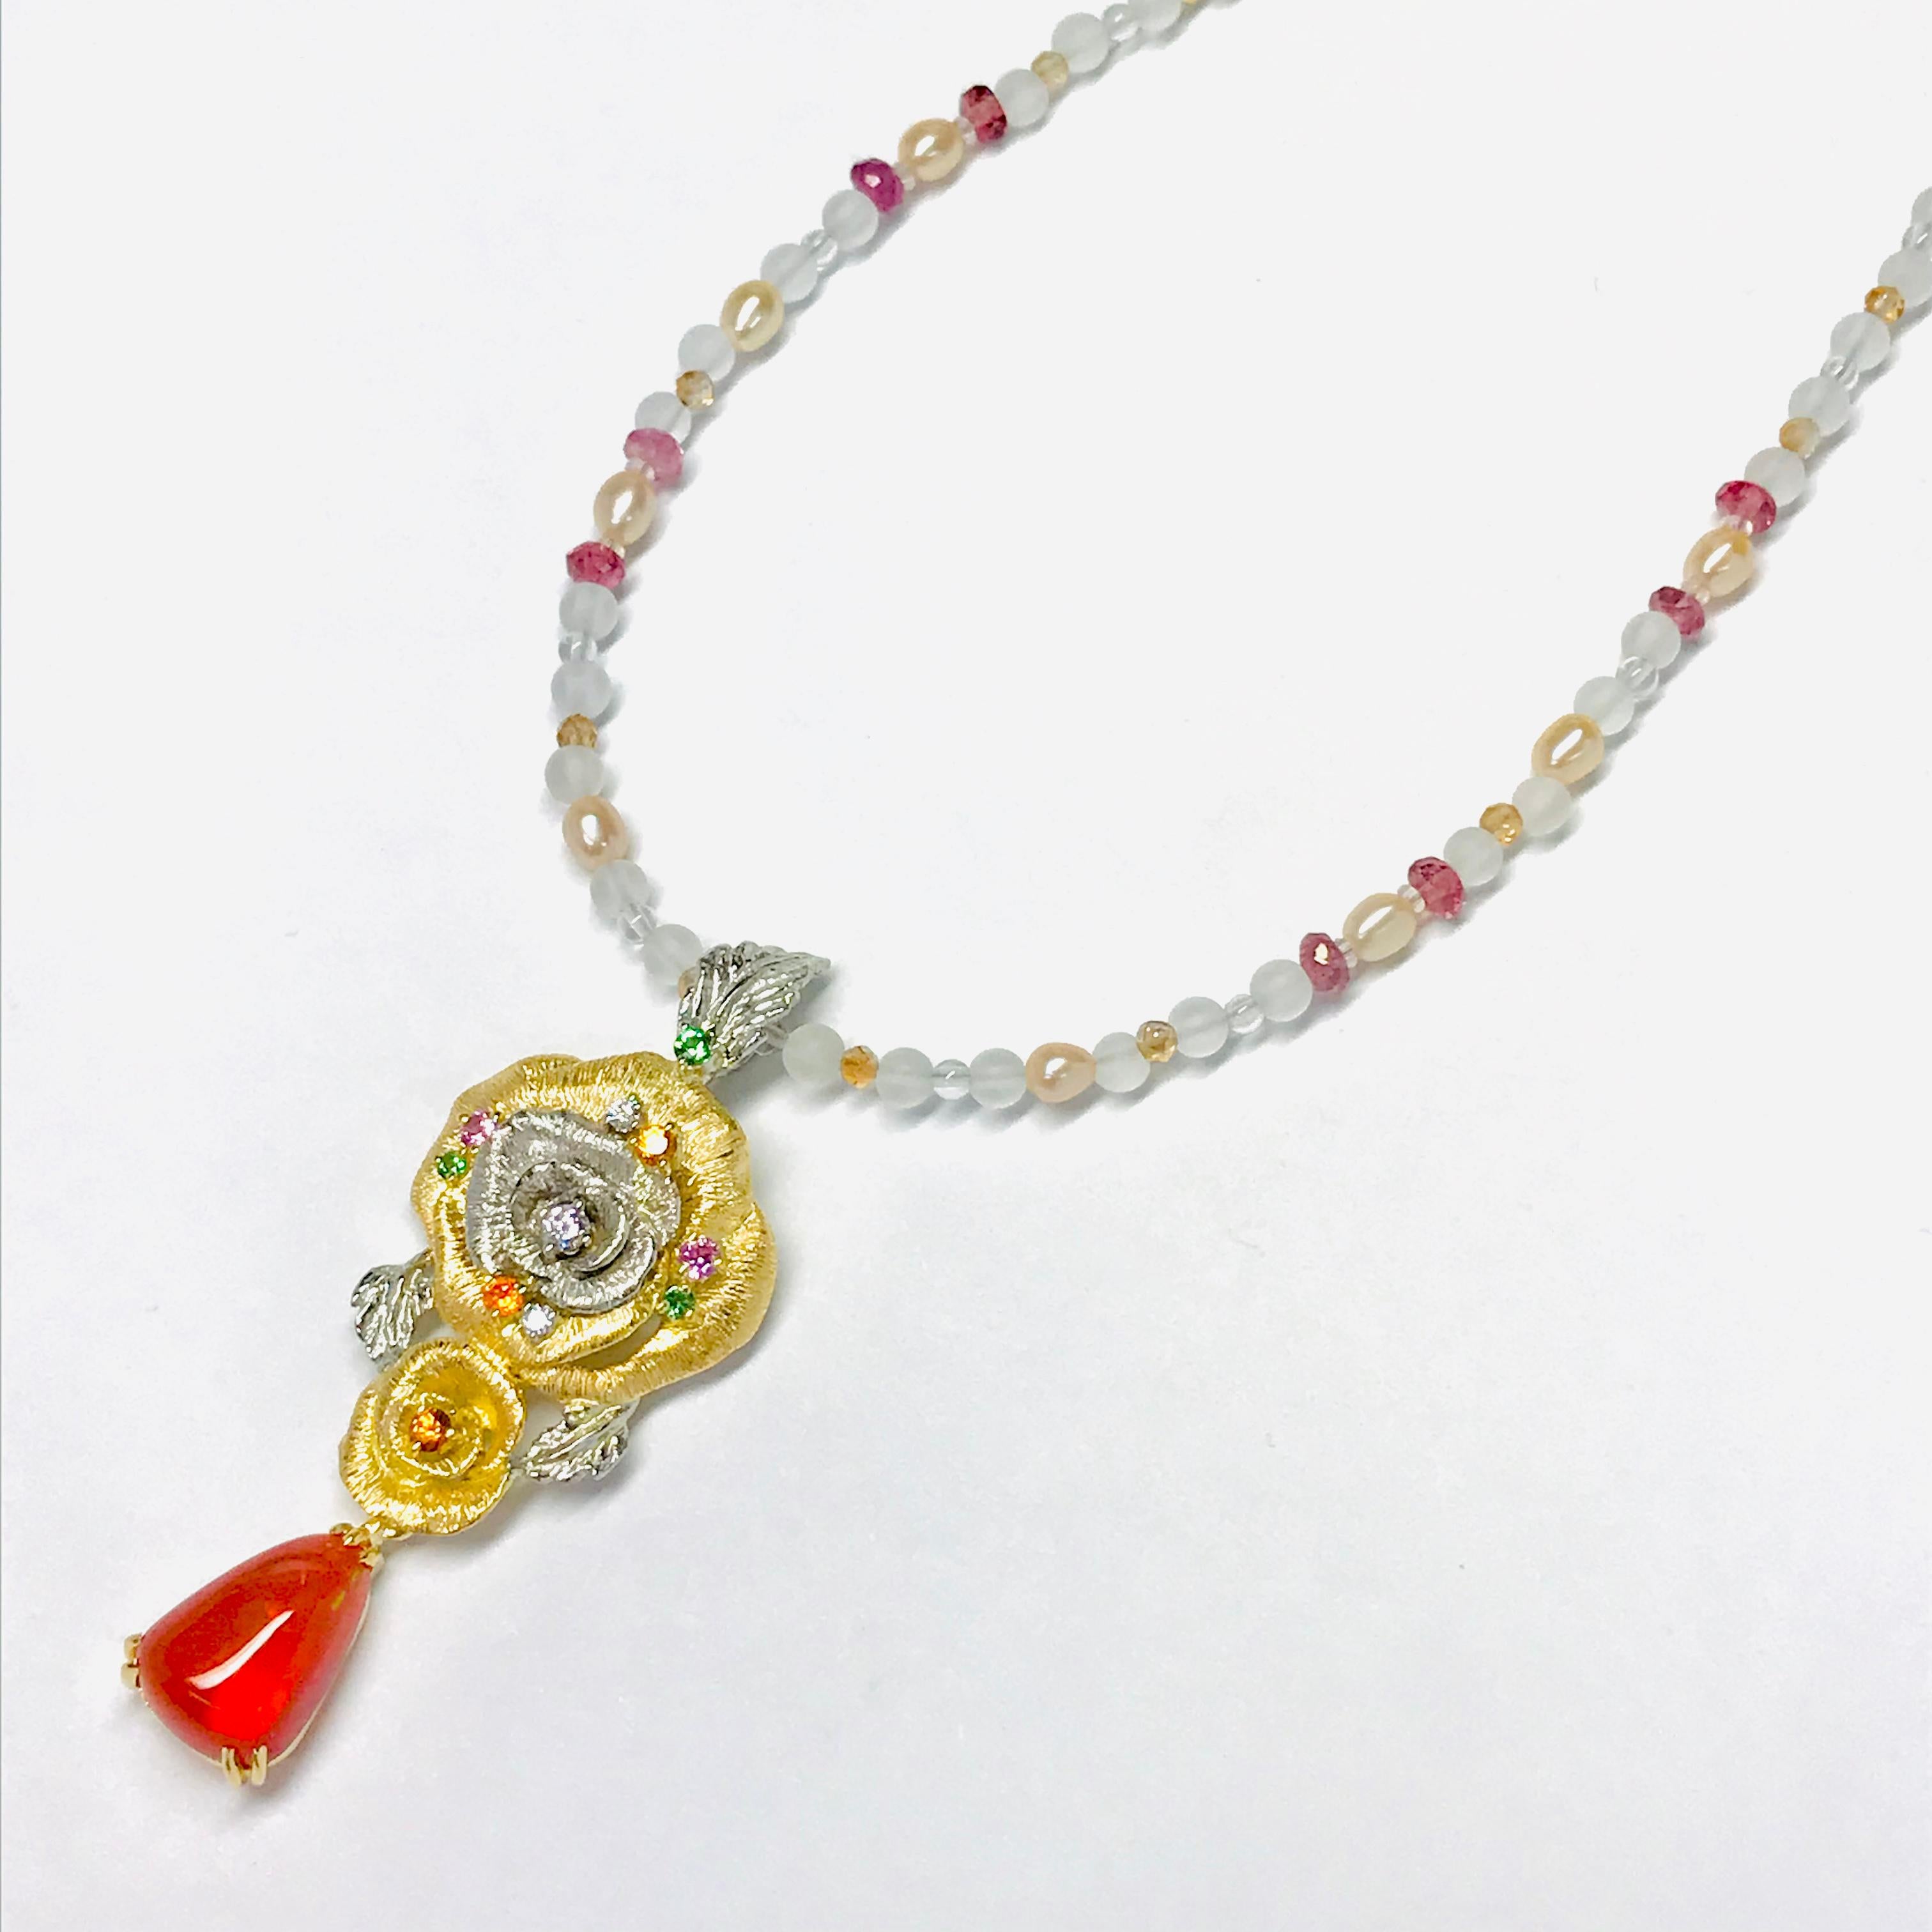 Artist Matsuzaki K18 Gold Platinum Rose Flower 3.02 Carat Fire Opal Pendant Necklace For Sale